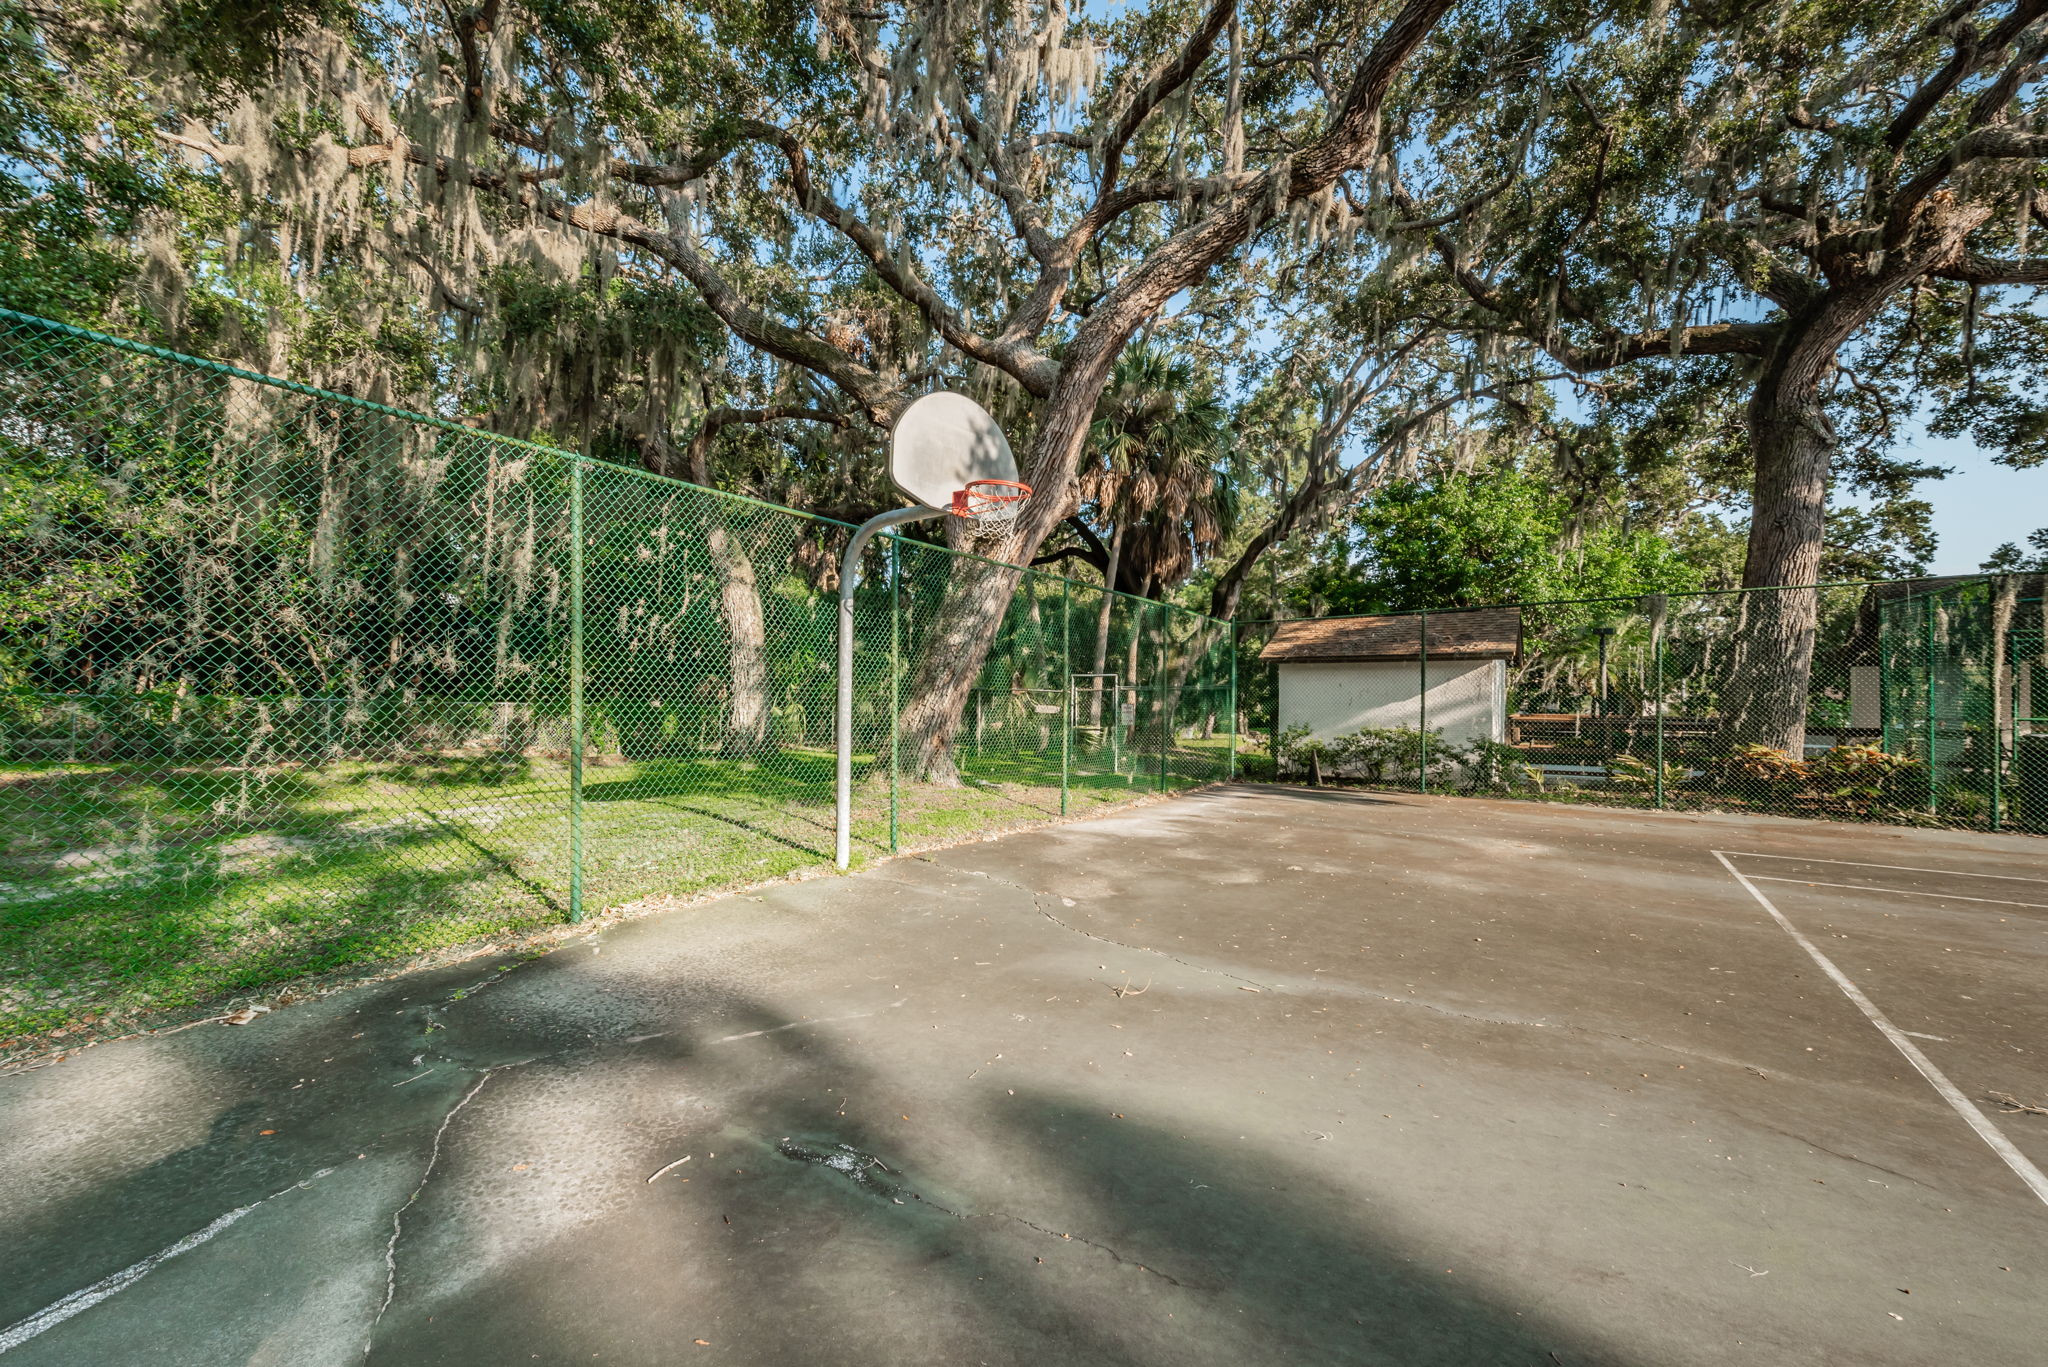 Philippe Bay9 Basketball Court